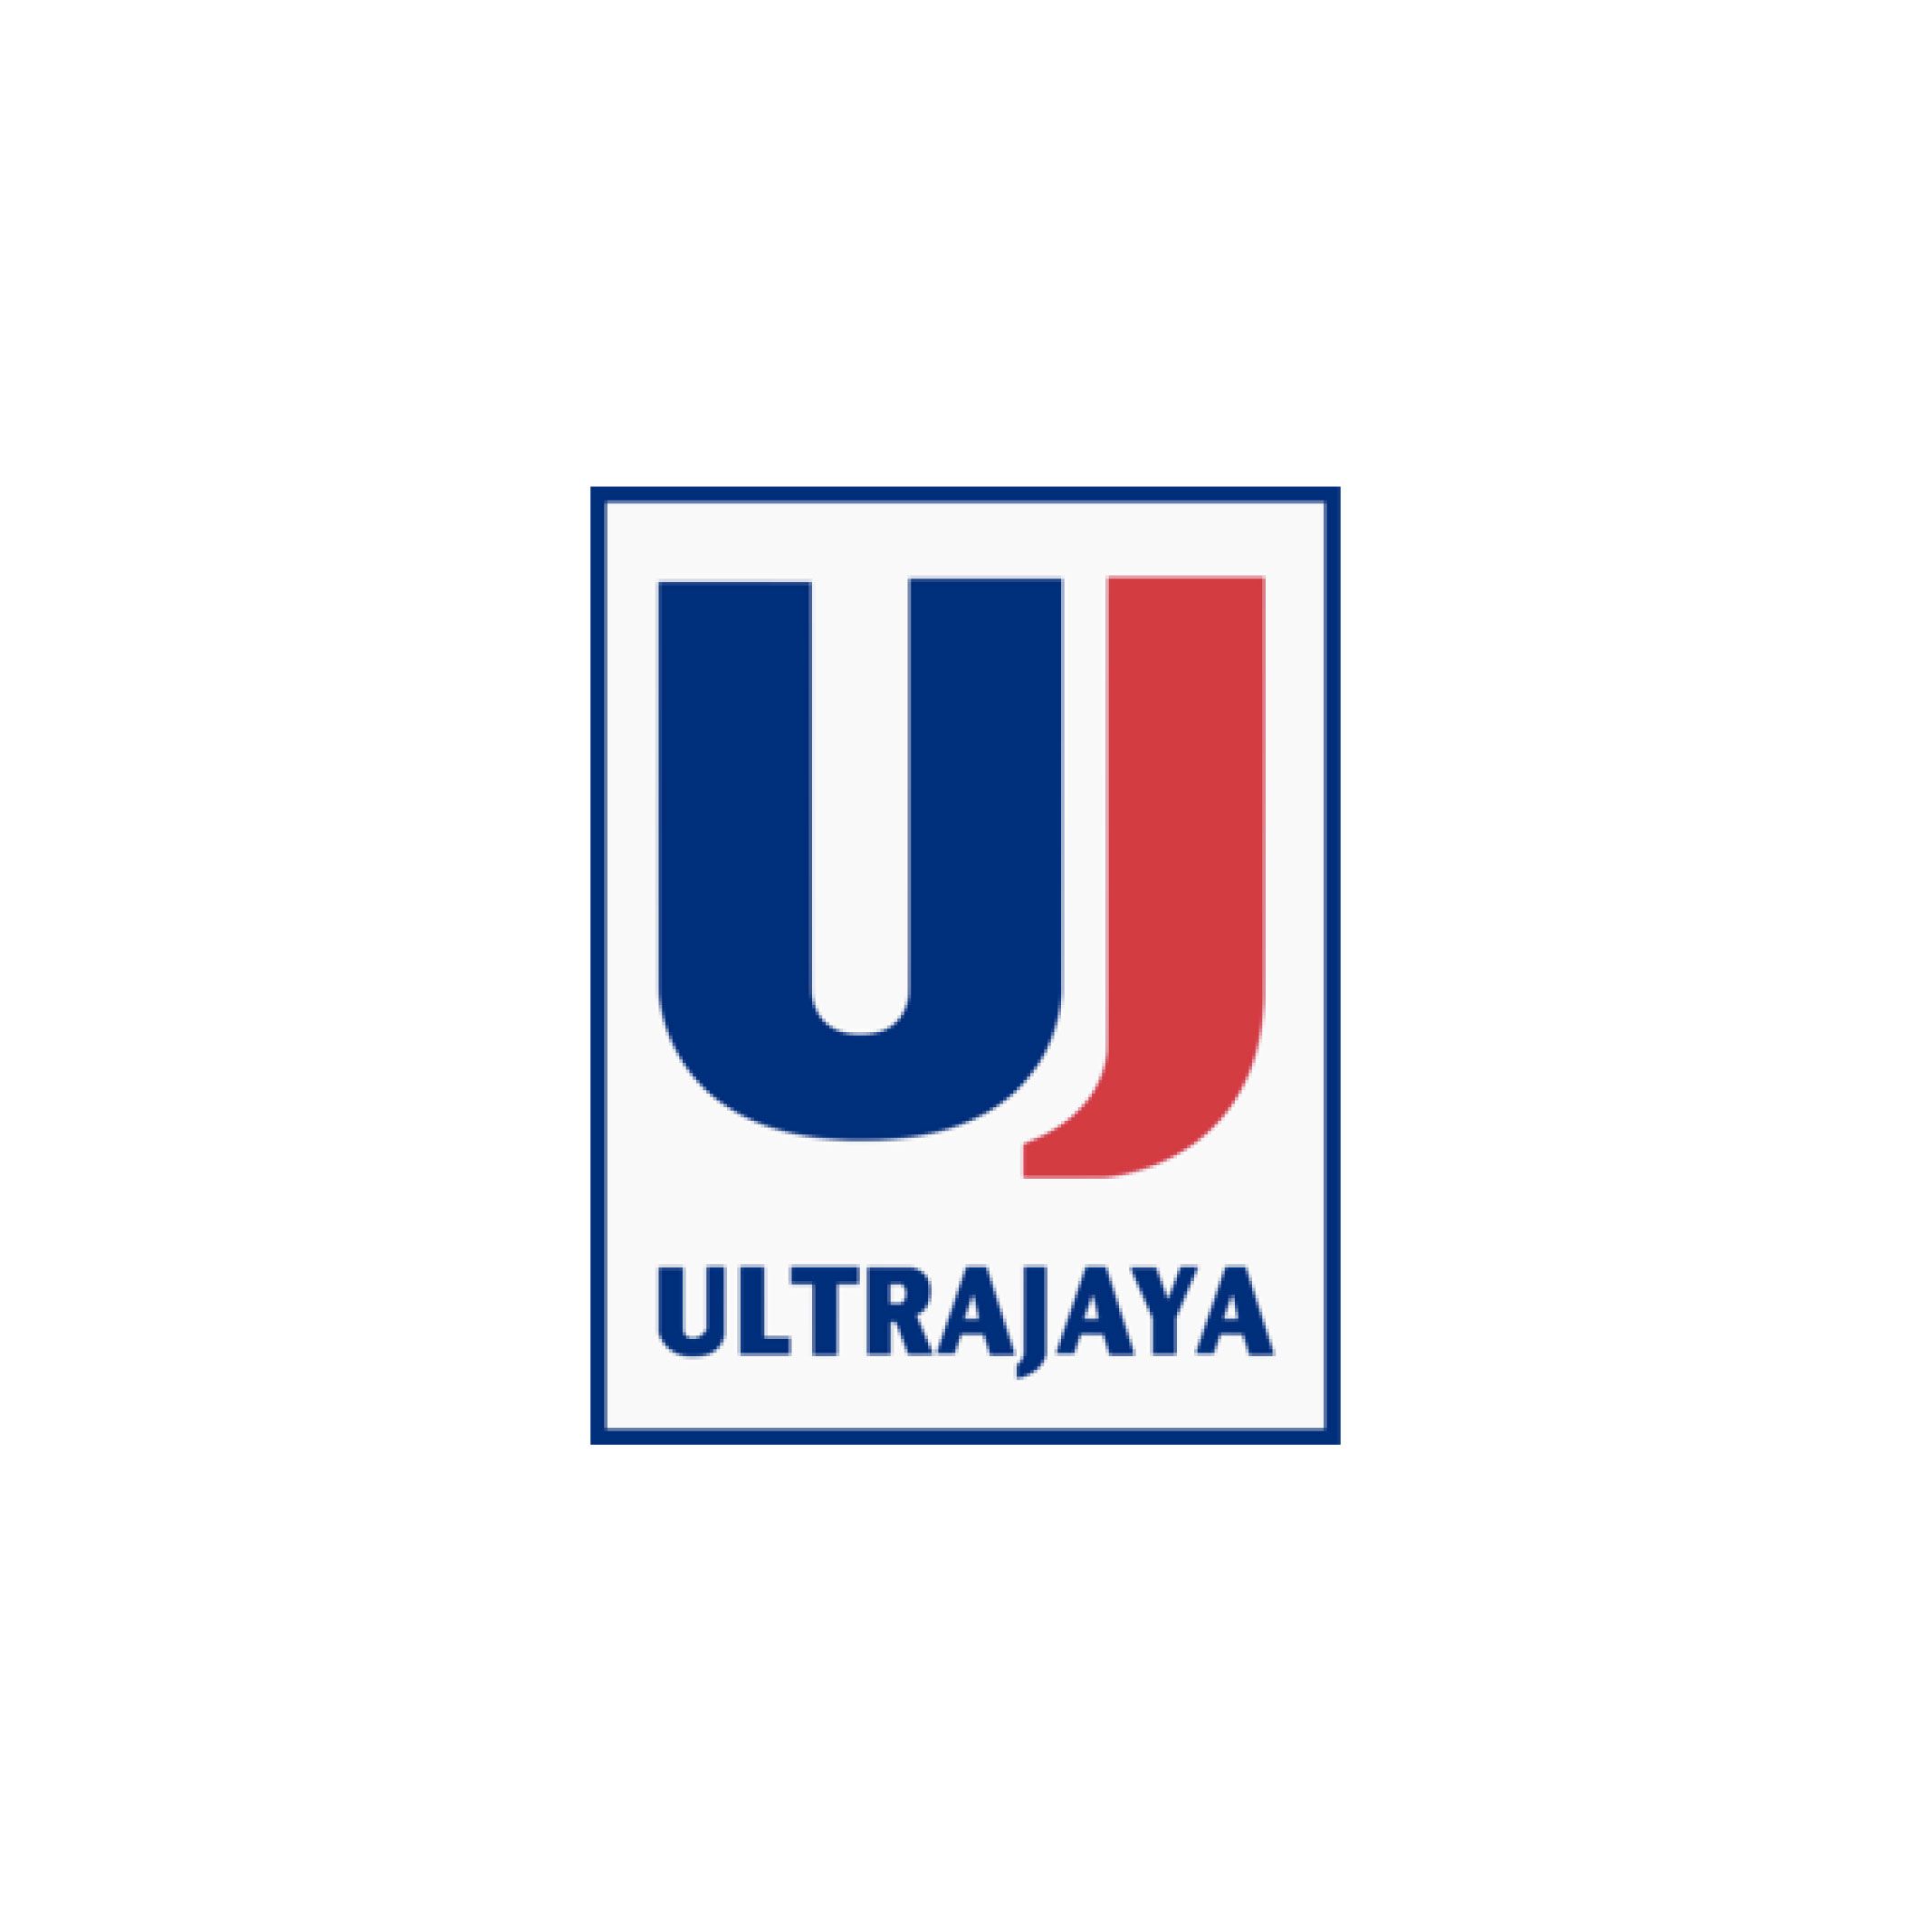 Ultrajaya